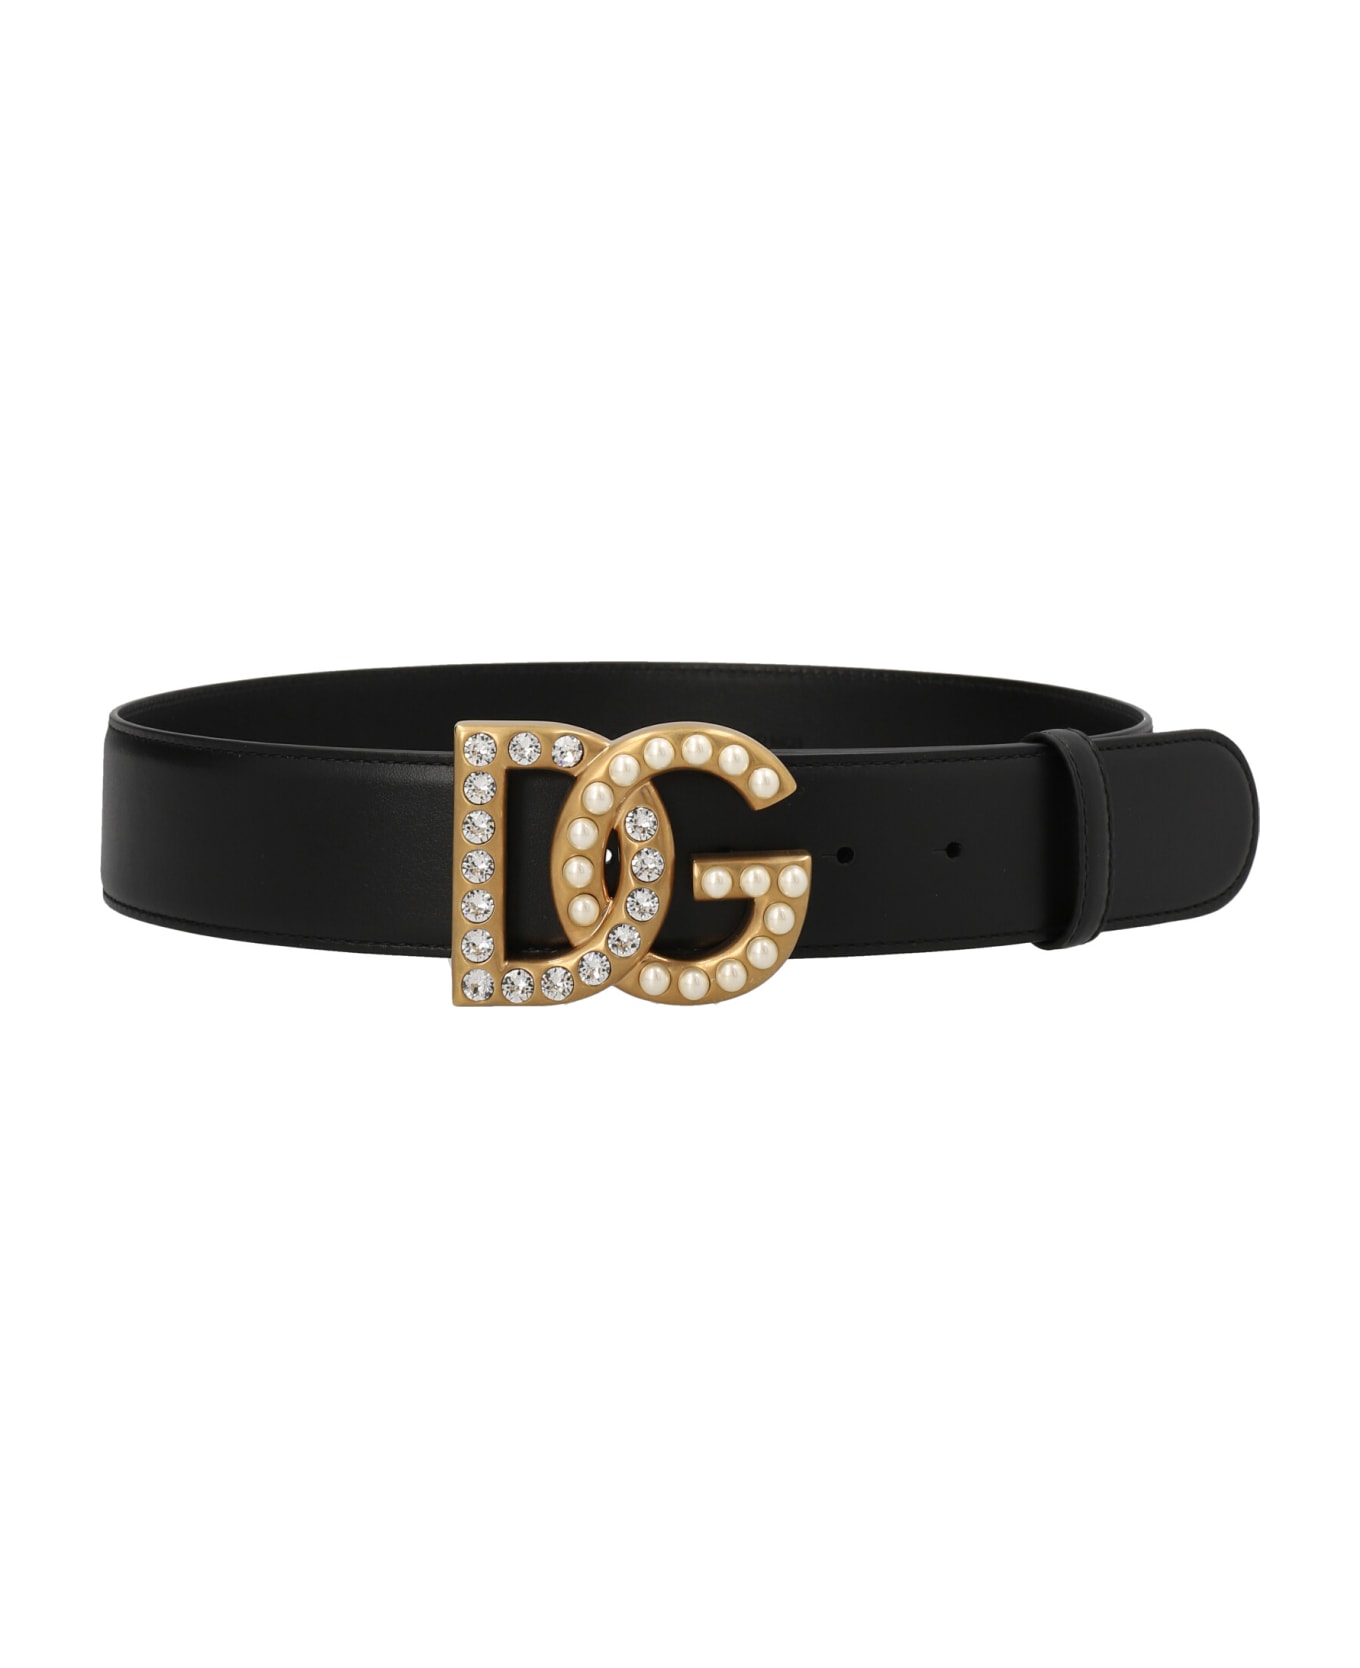 Dolce Black & Gabbana Logo Buckle Belt - Black  